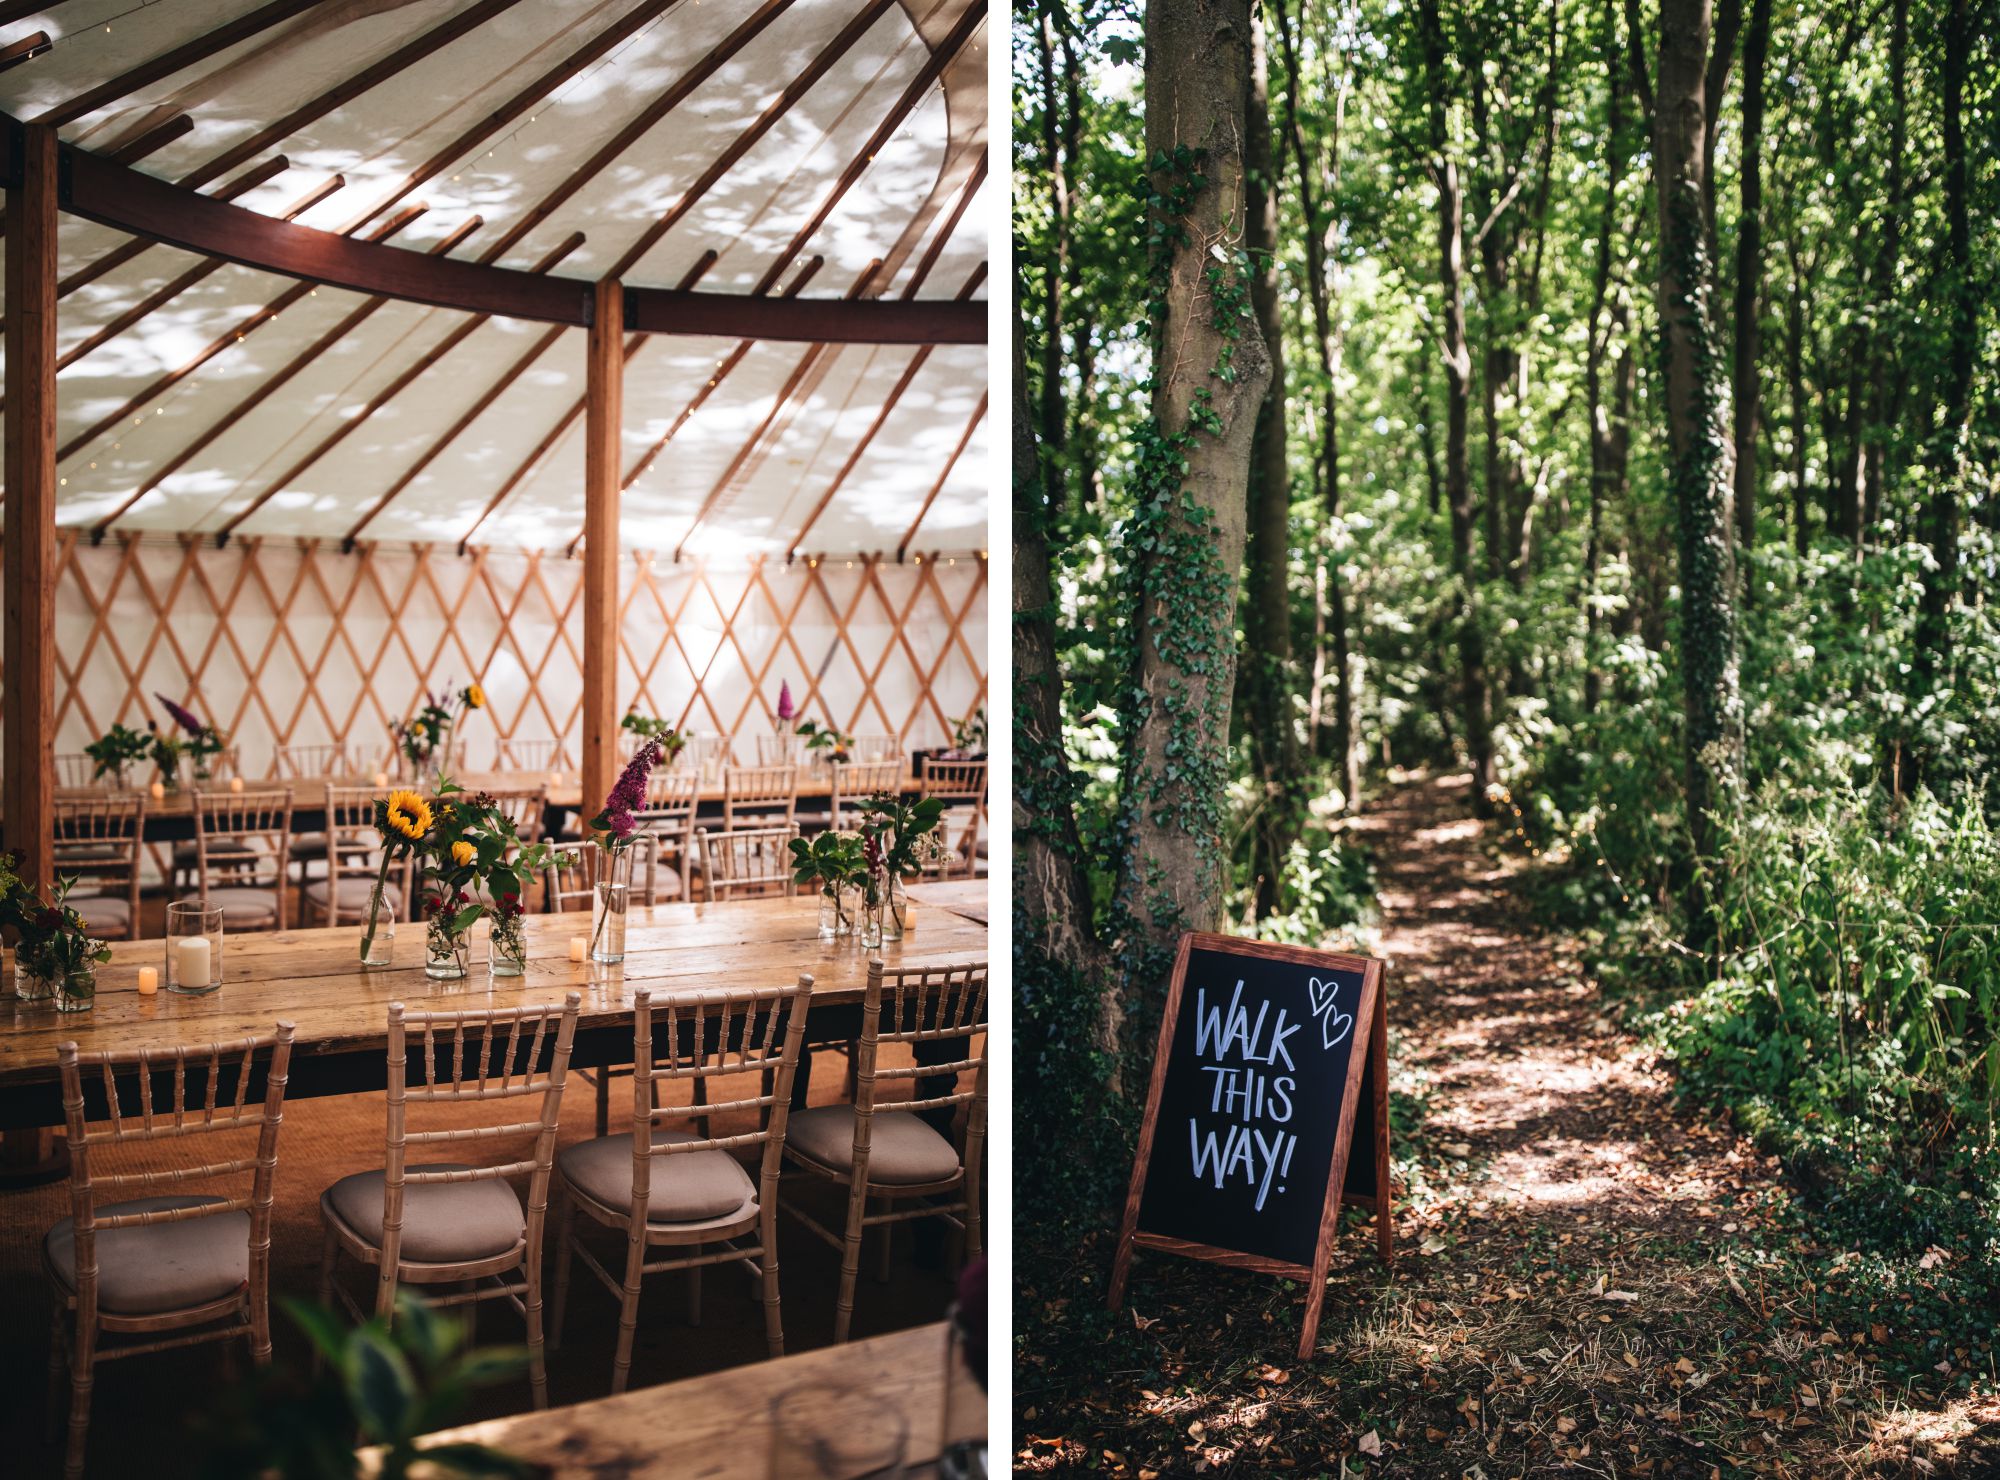 woodland walk sign and inside wedding yurt